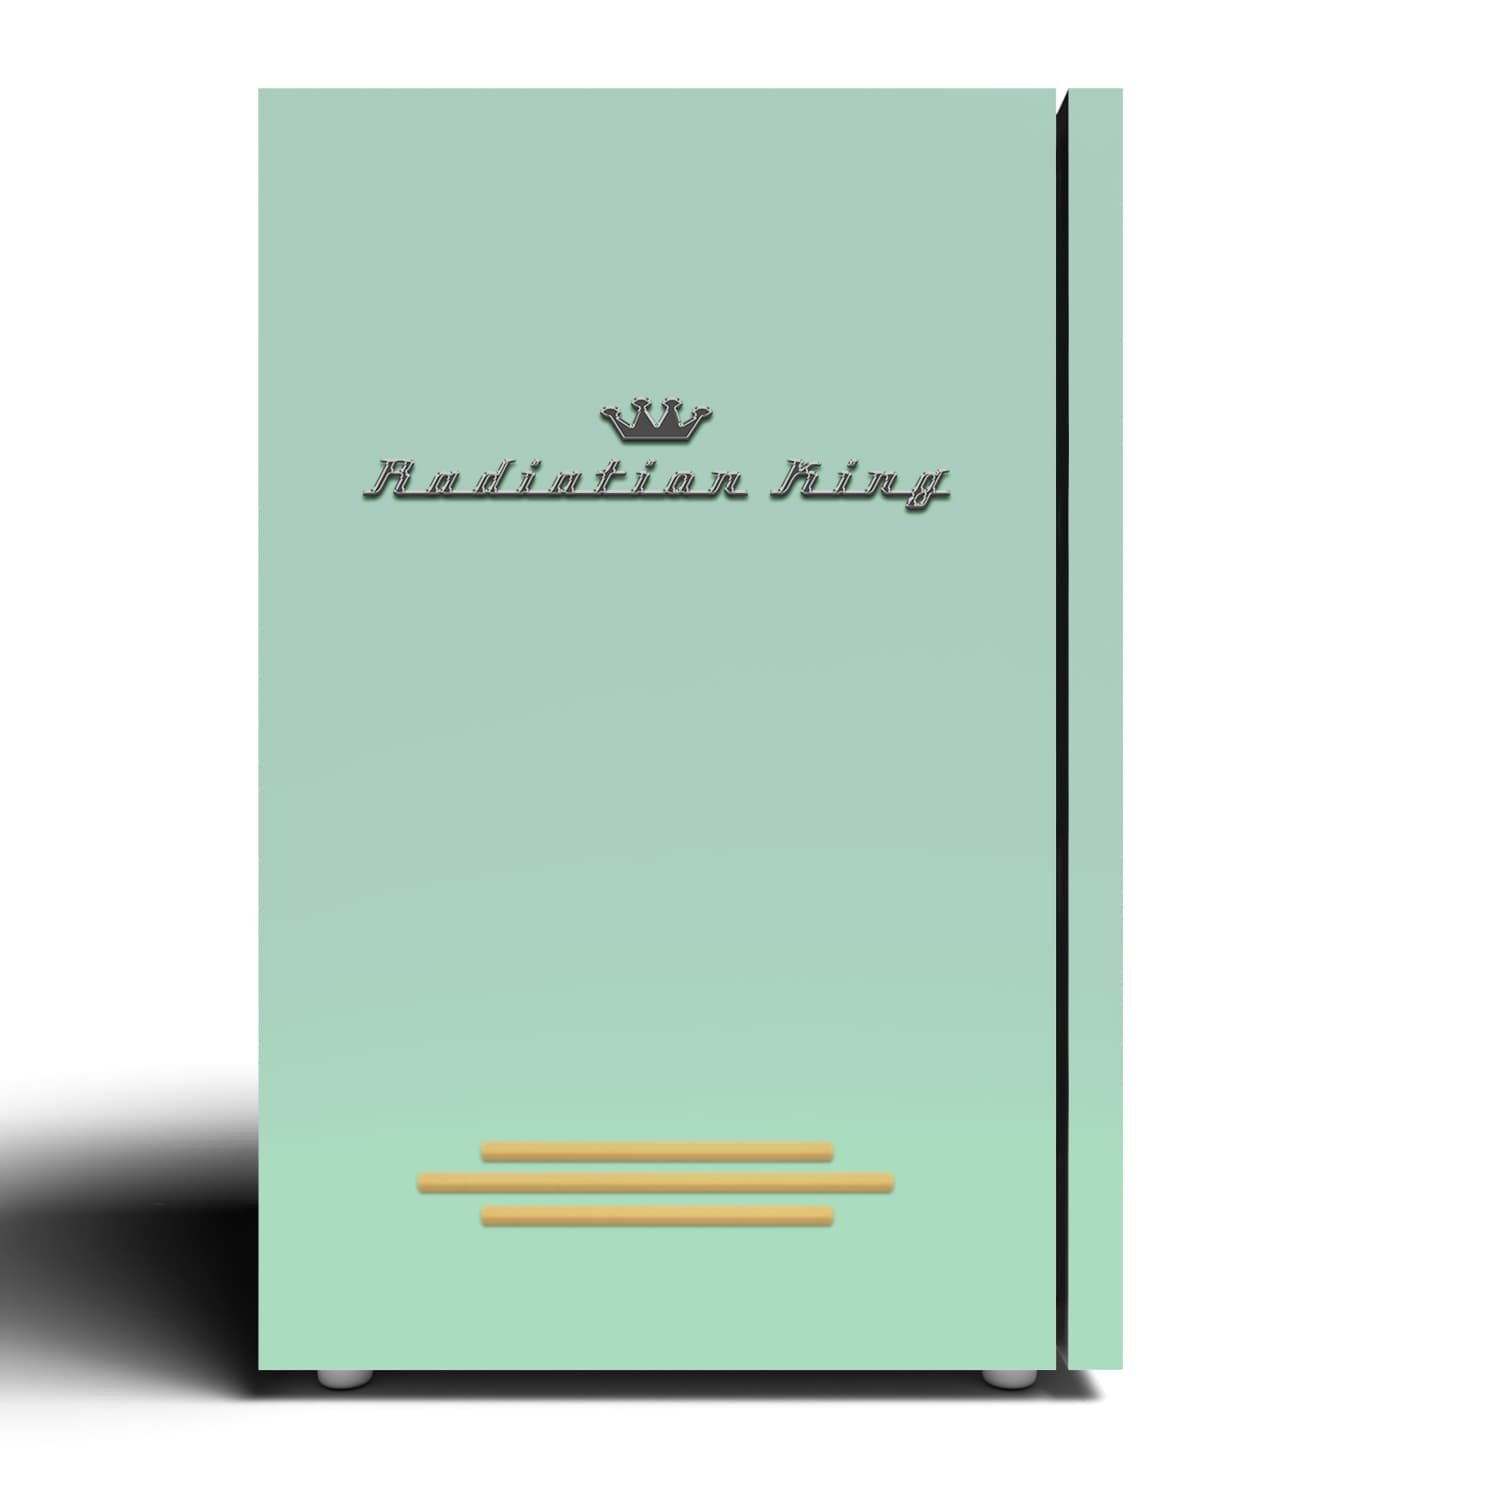 Radiation King Retro TV mini fridge wrap